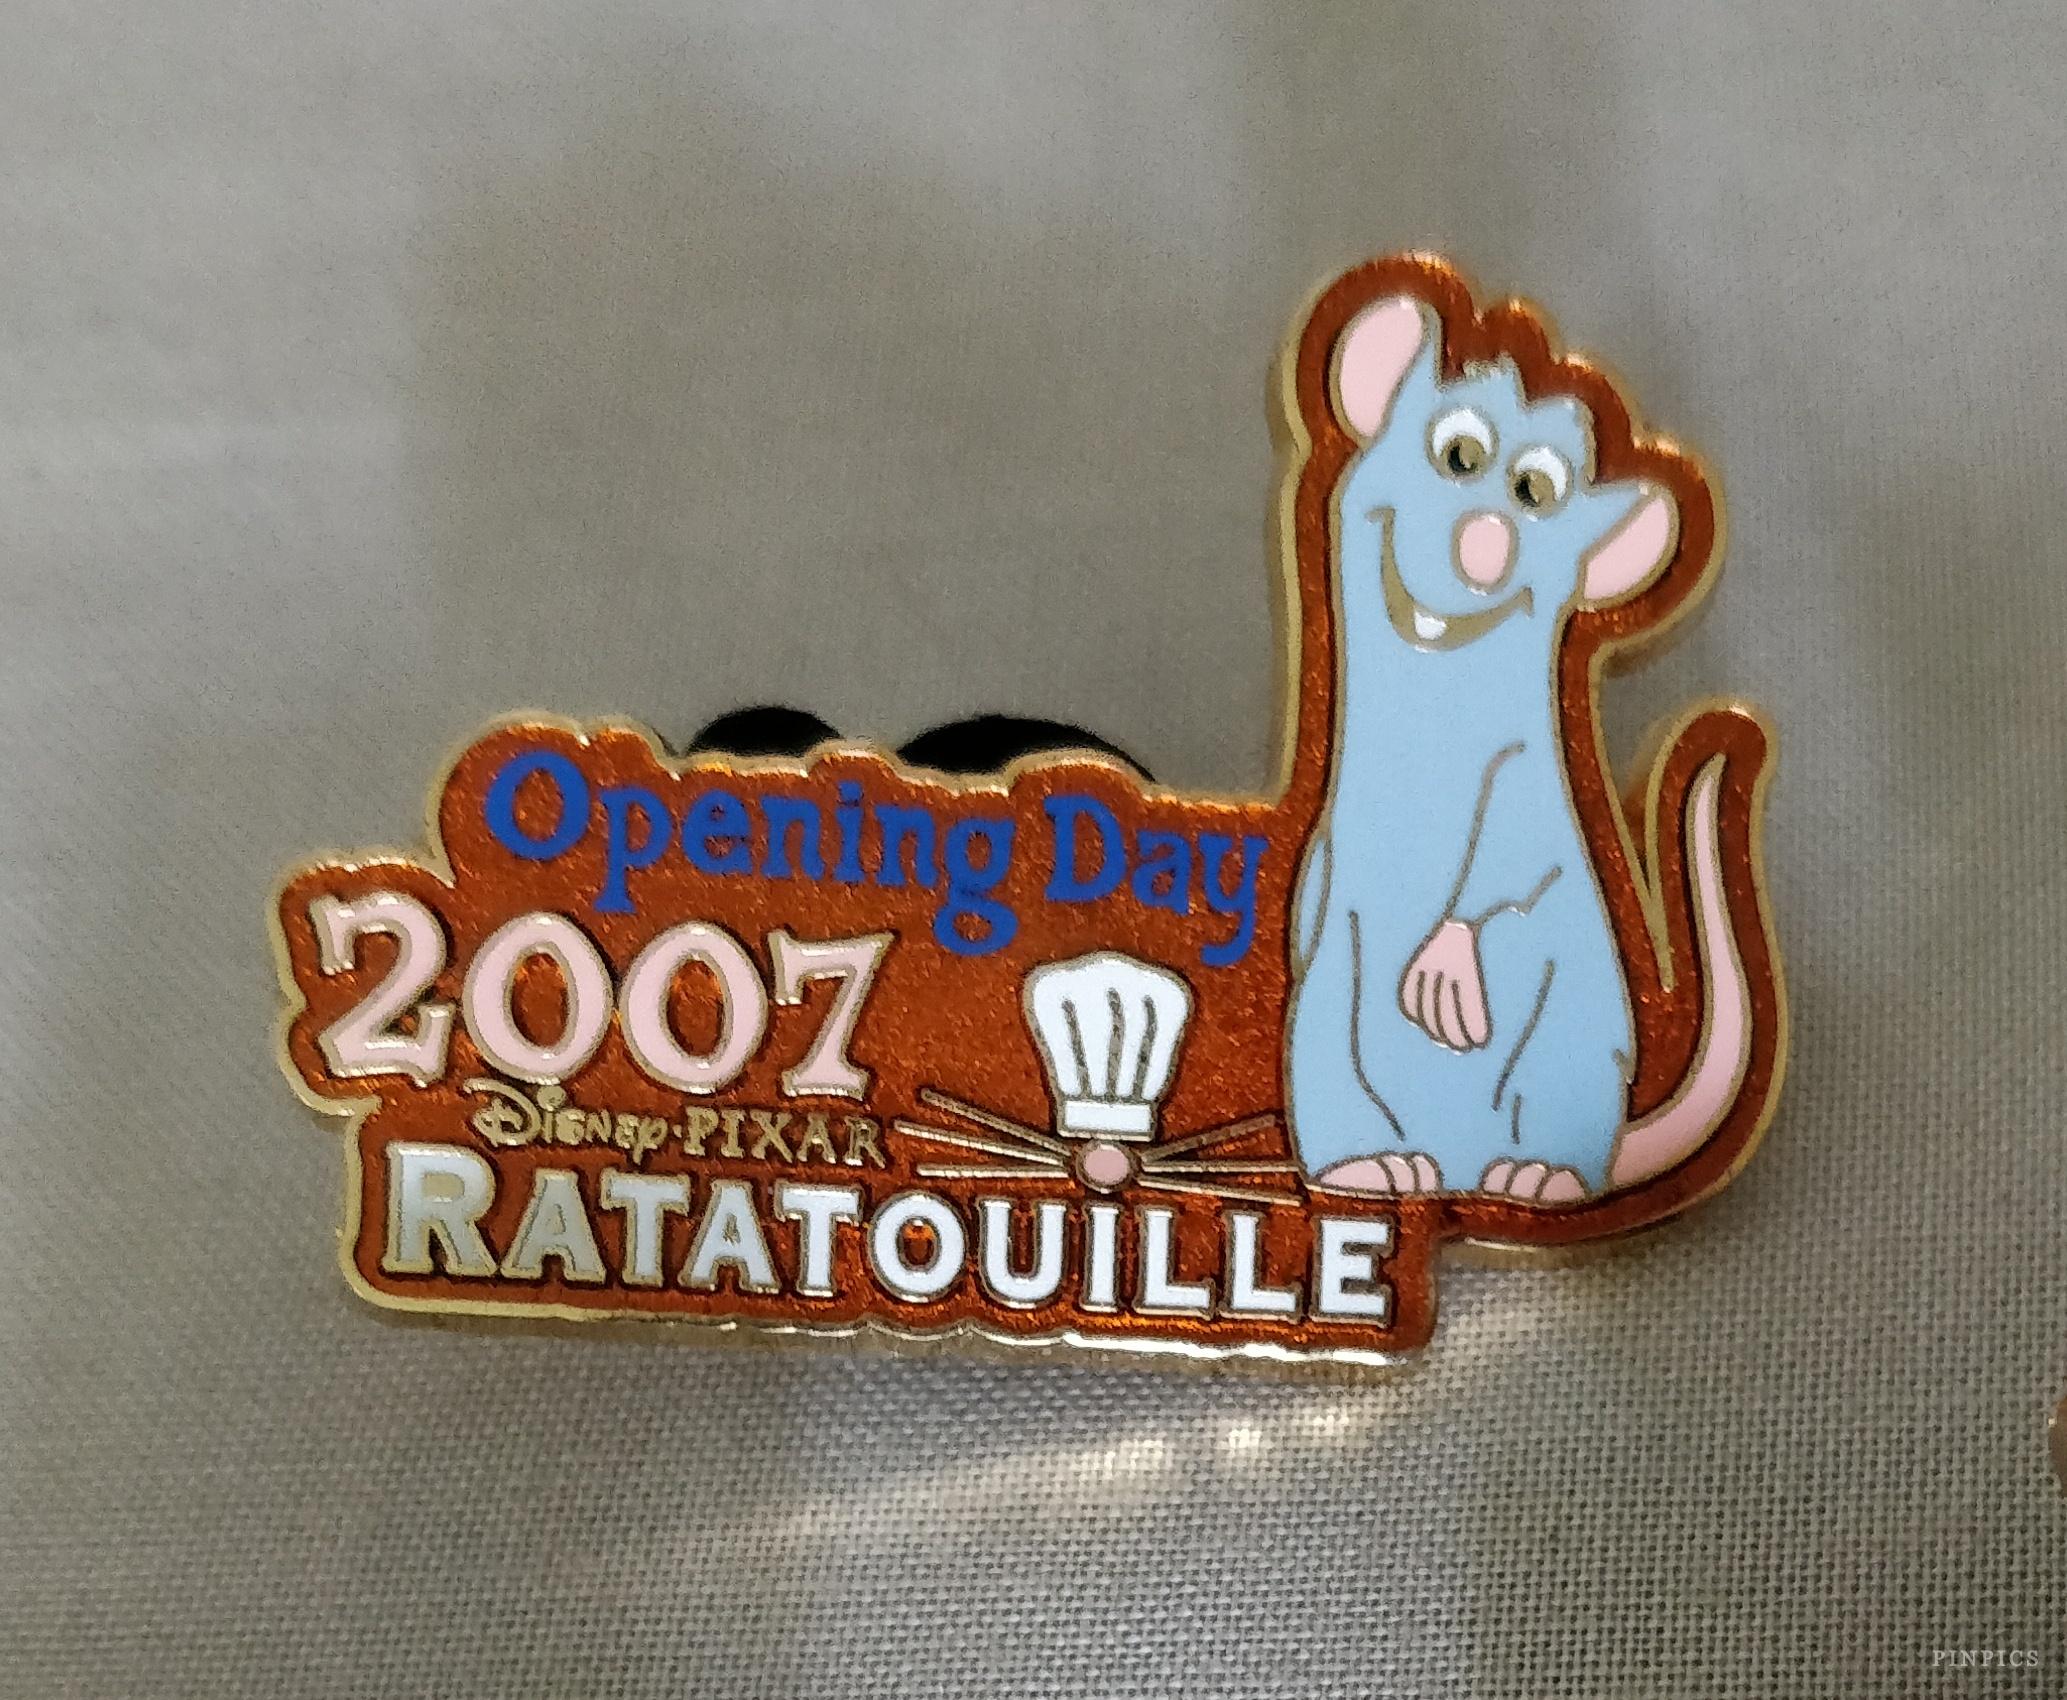 WOD NYC - Disney-Pixar's Ratatouille - Opening Day 2007 (PROTOTYPE)